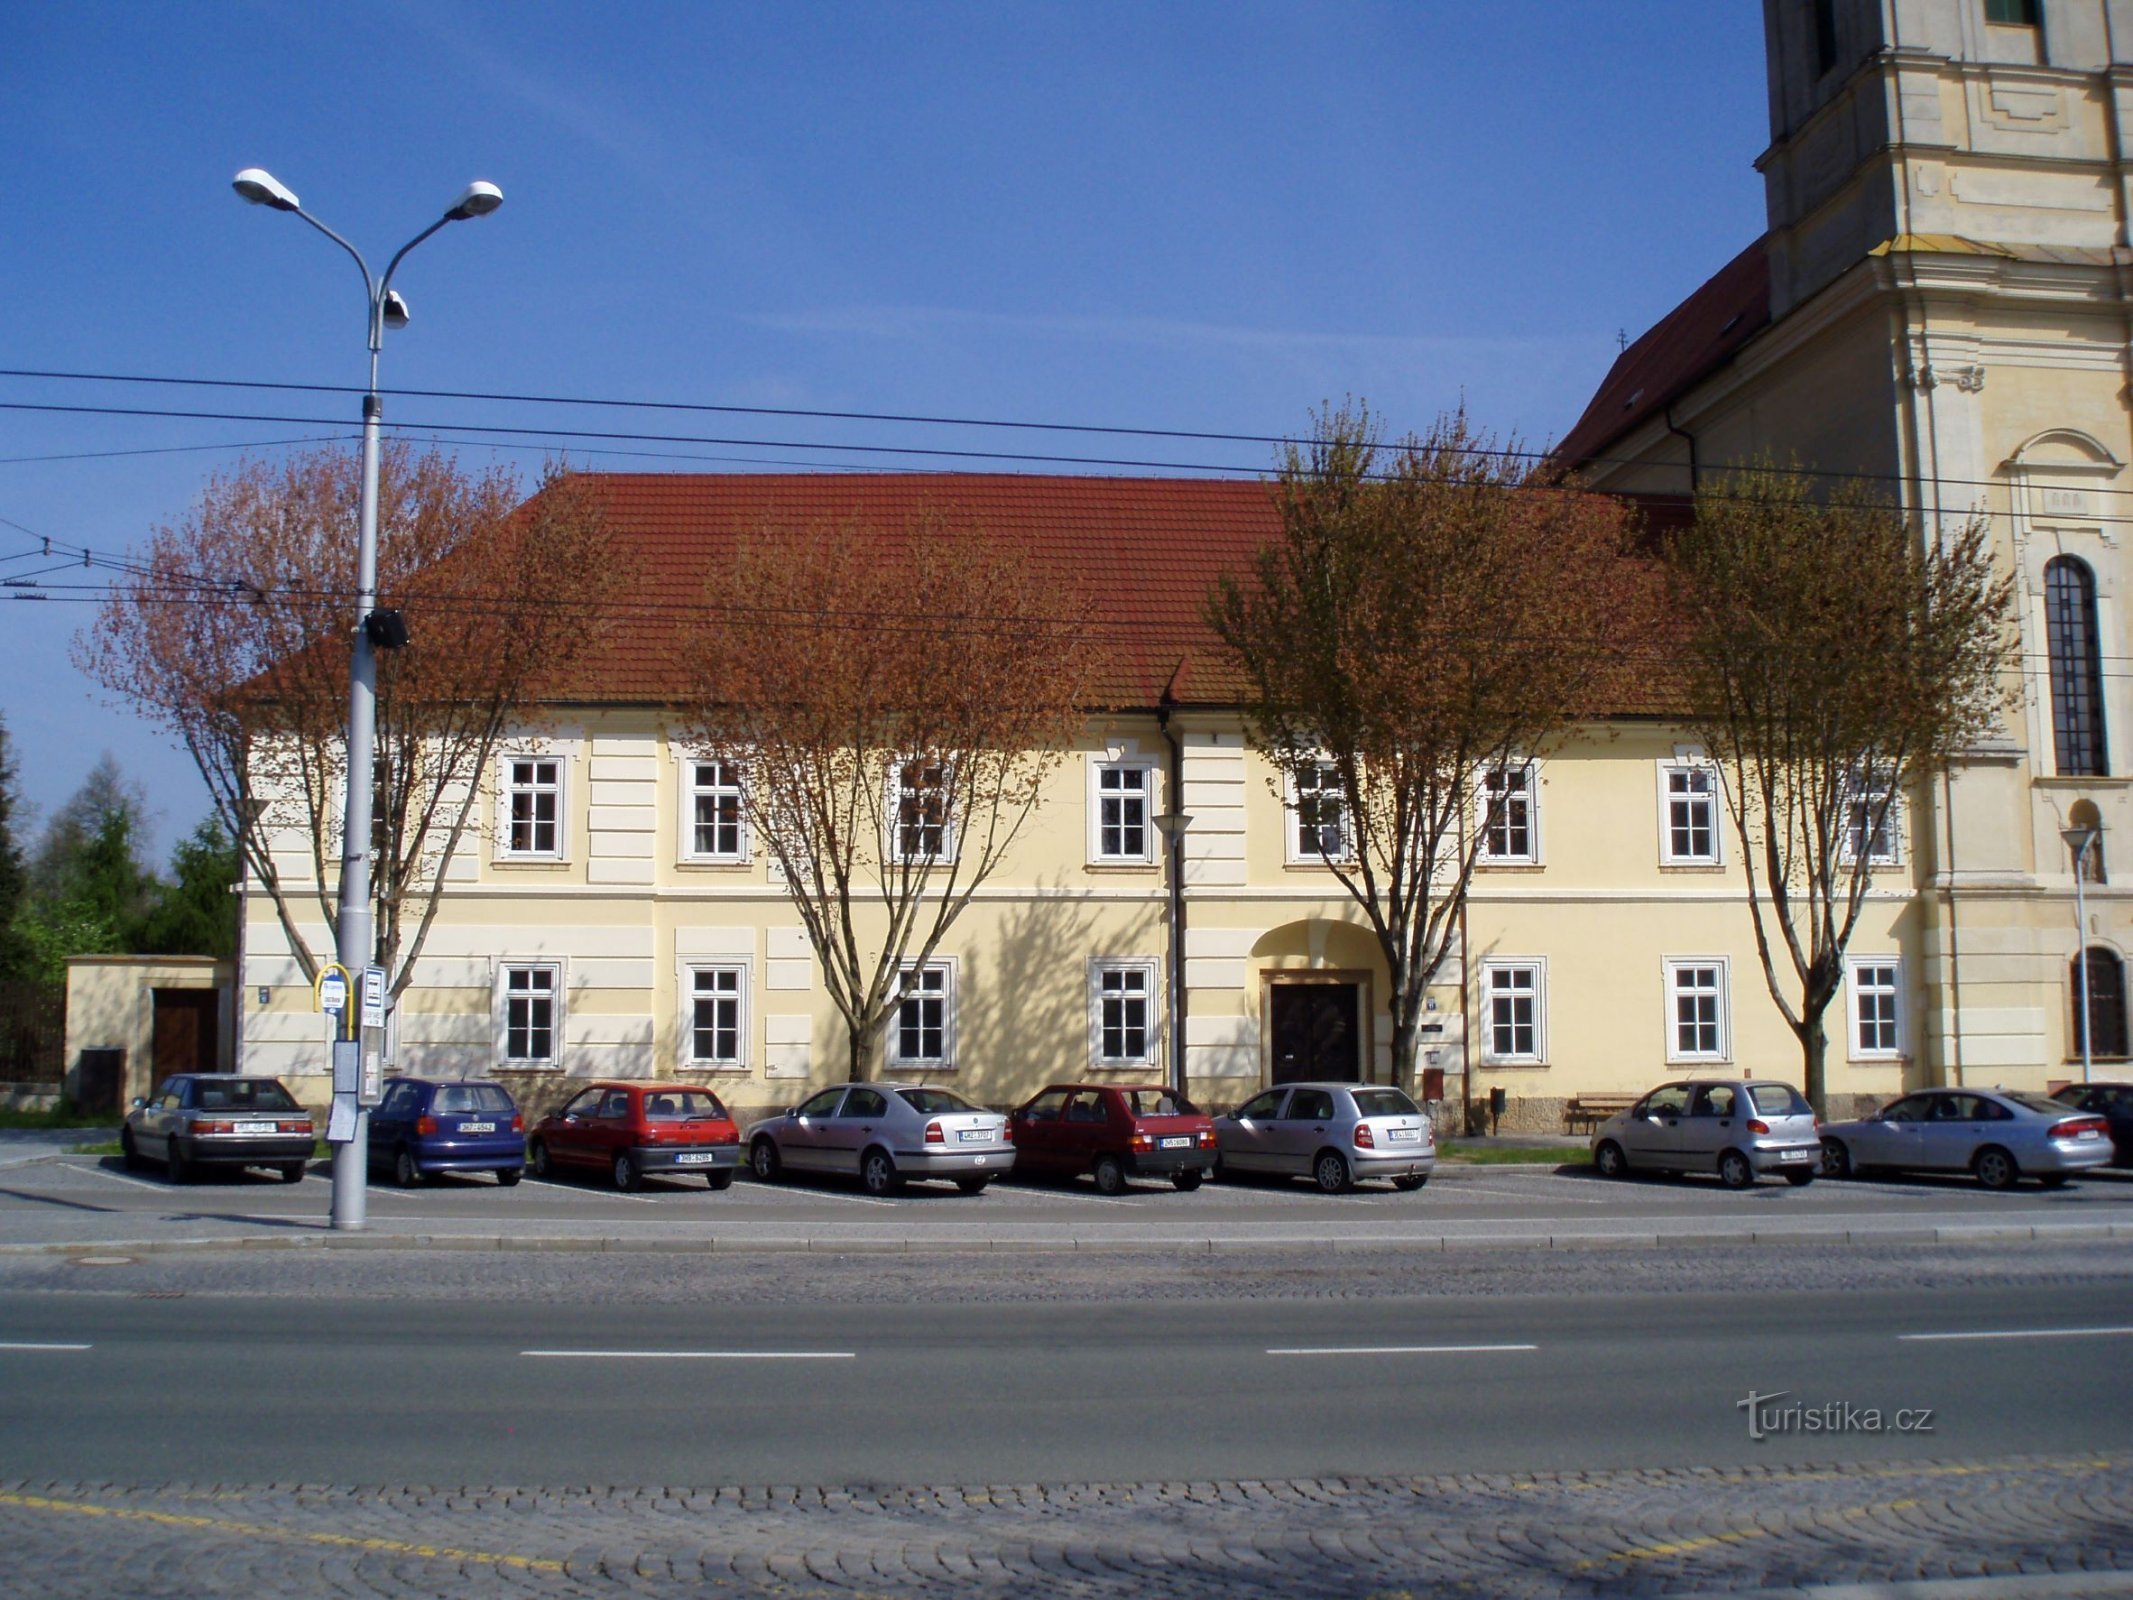 L'ex monastero (Denisovo náměstí n. 26 e 172, Hradec Králové, 28.4.2010/XNUMX/XNUMX)